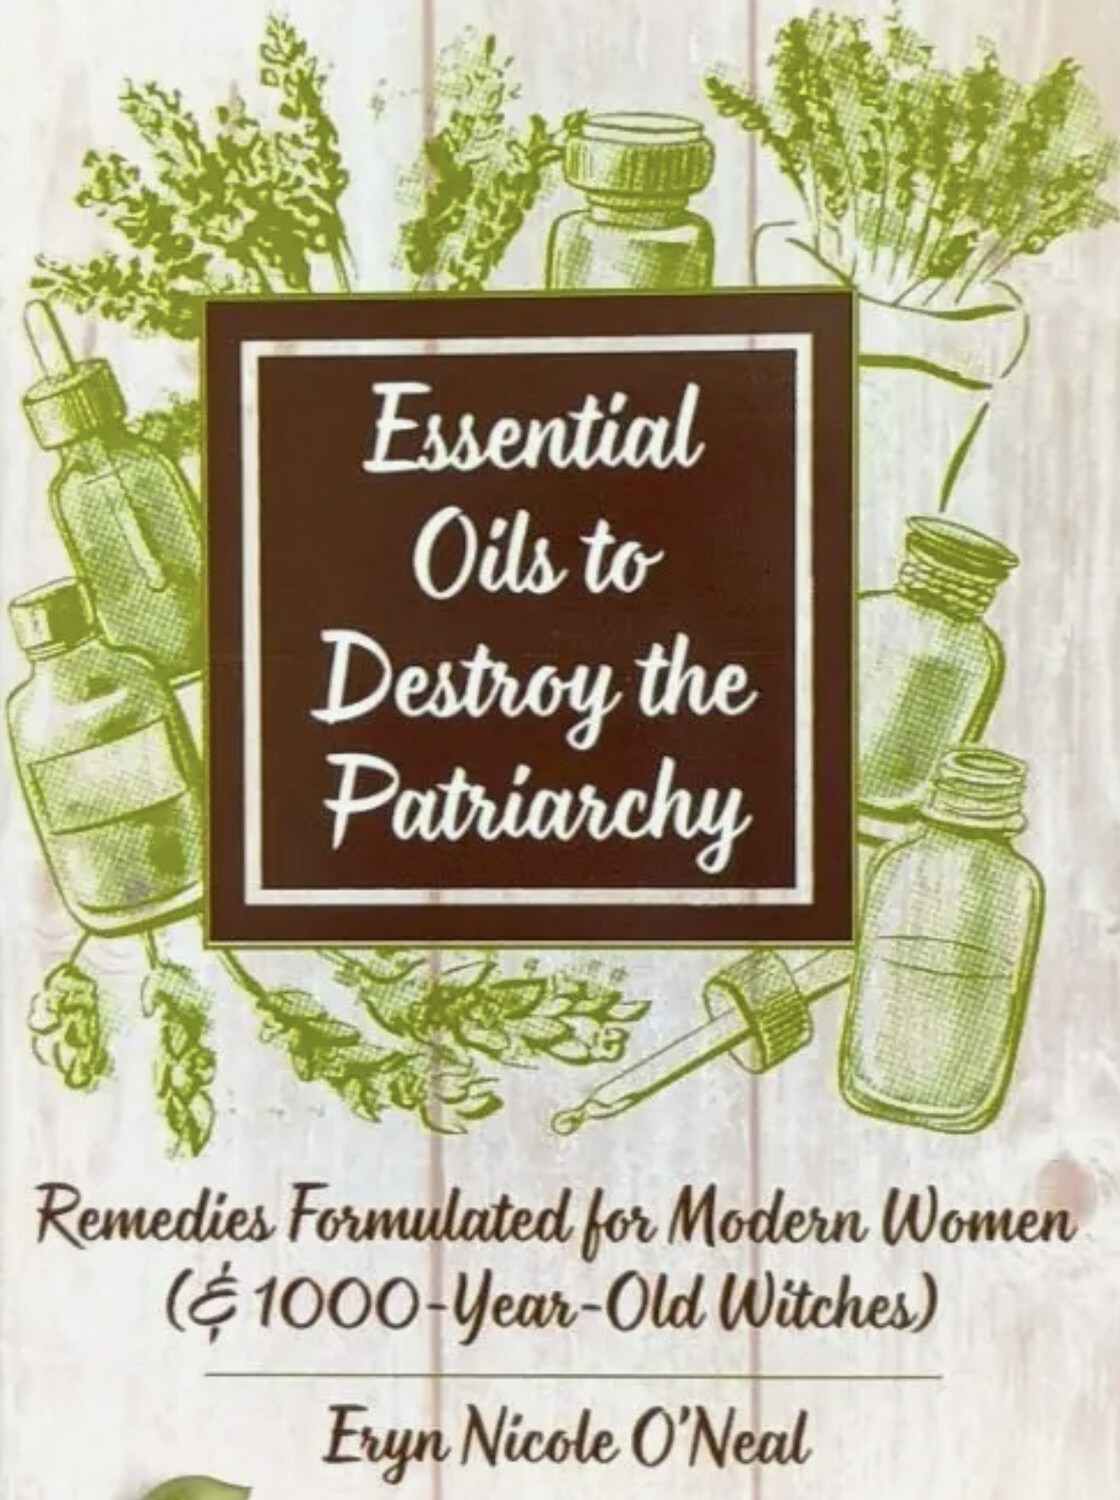 Essential Oils to Destroy the Patriarchy - Zine by Eryn Nicole O'Neal